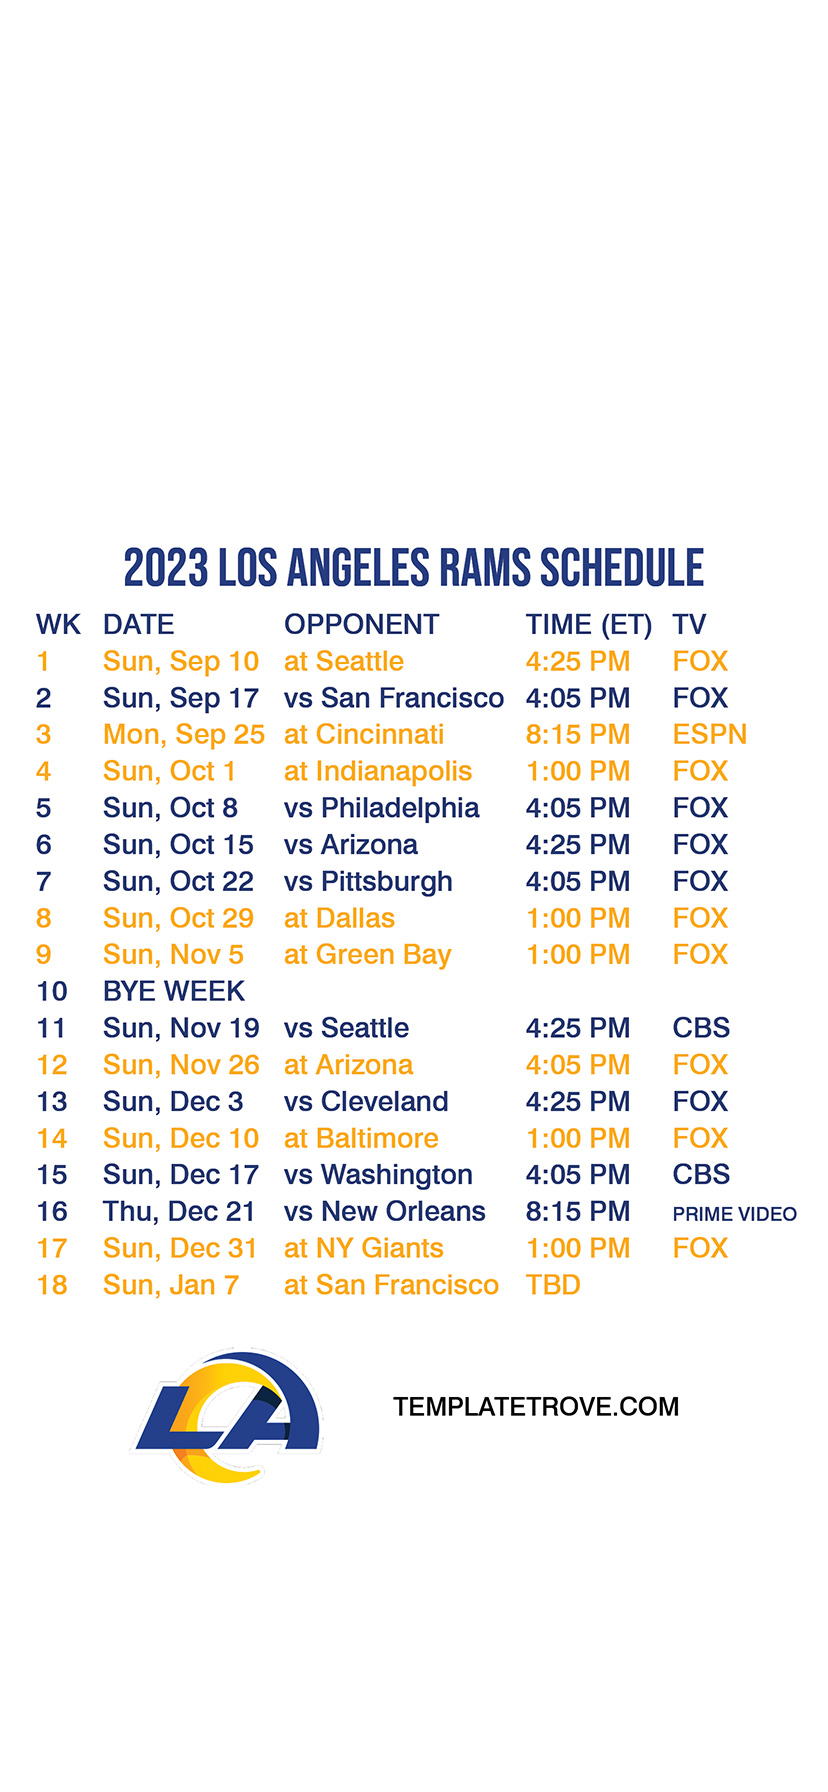 2023-2024 Los Angeles Rams Lock Screen Schedule for iPhone 6-7-8 Plus